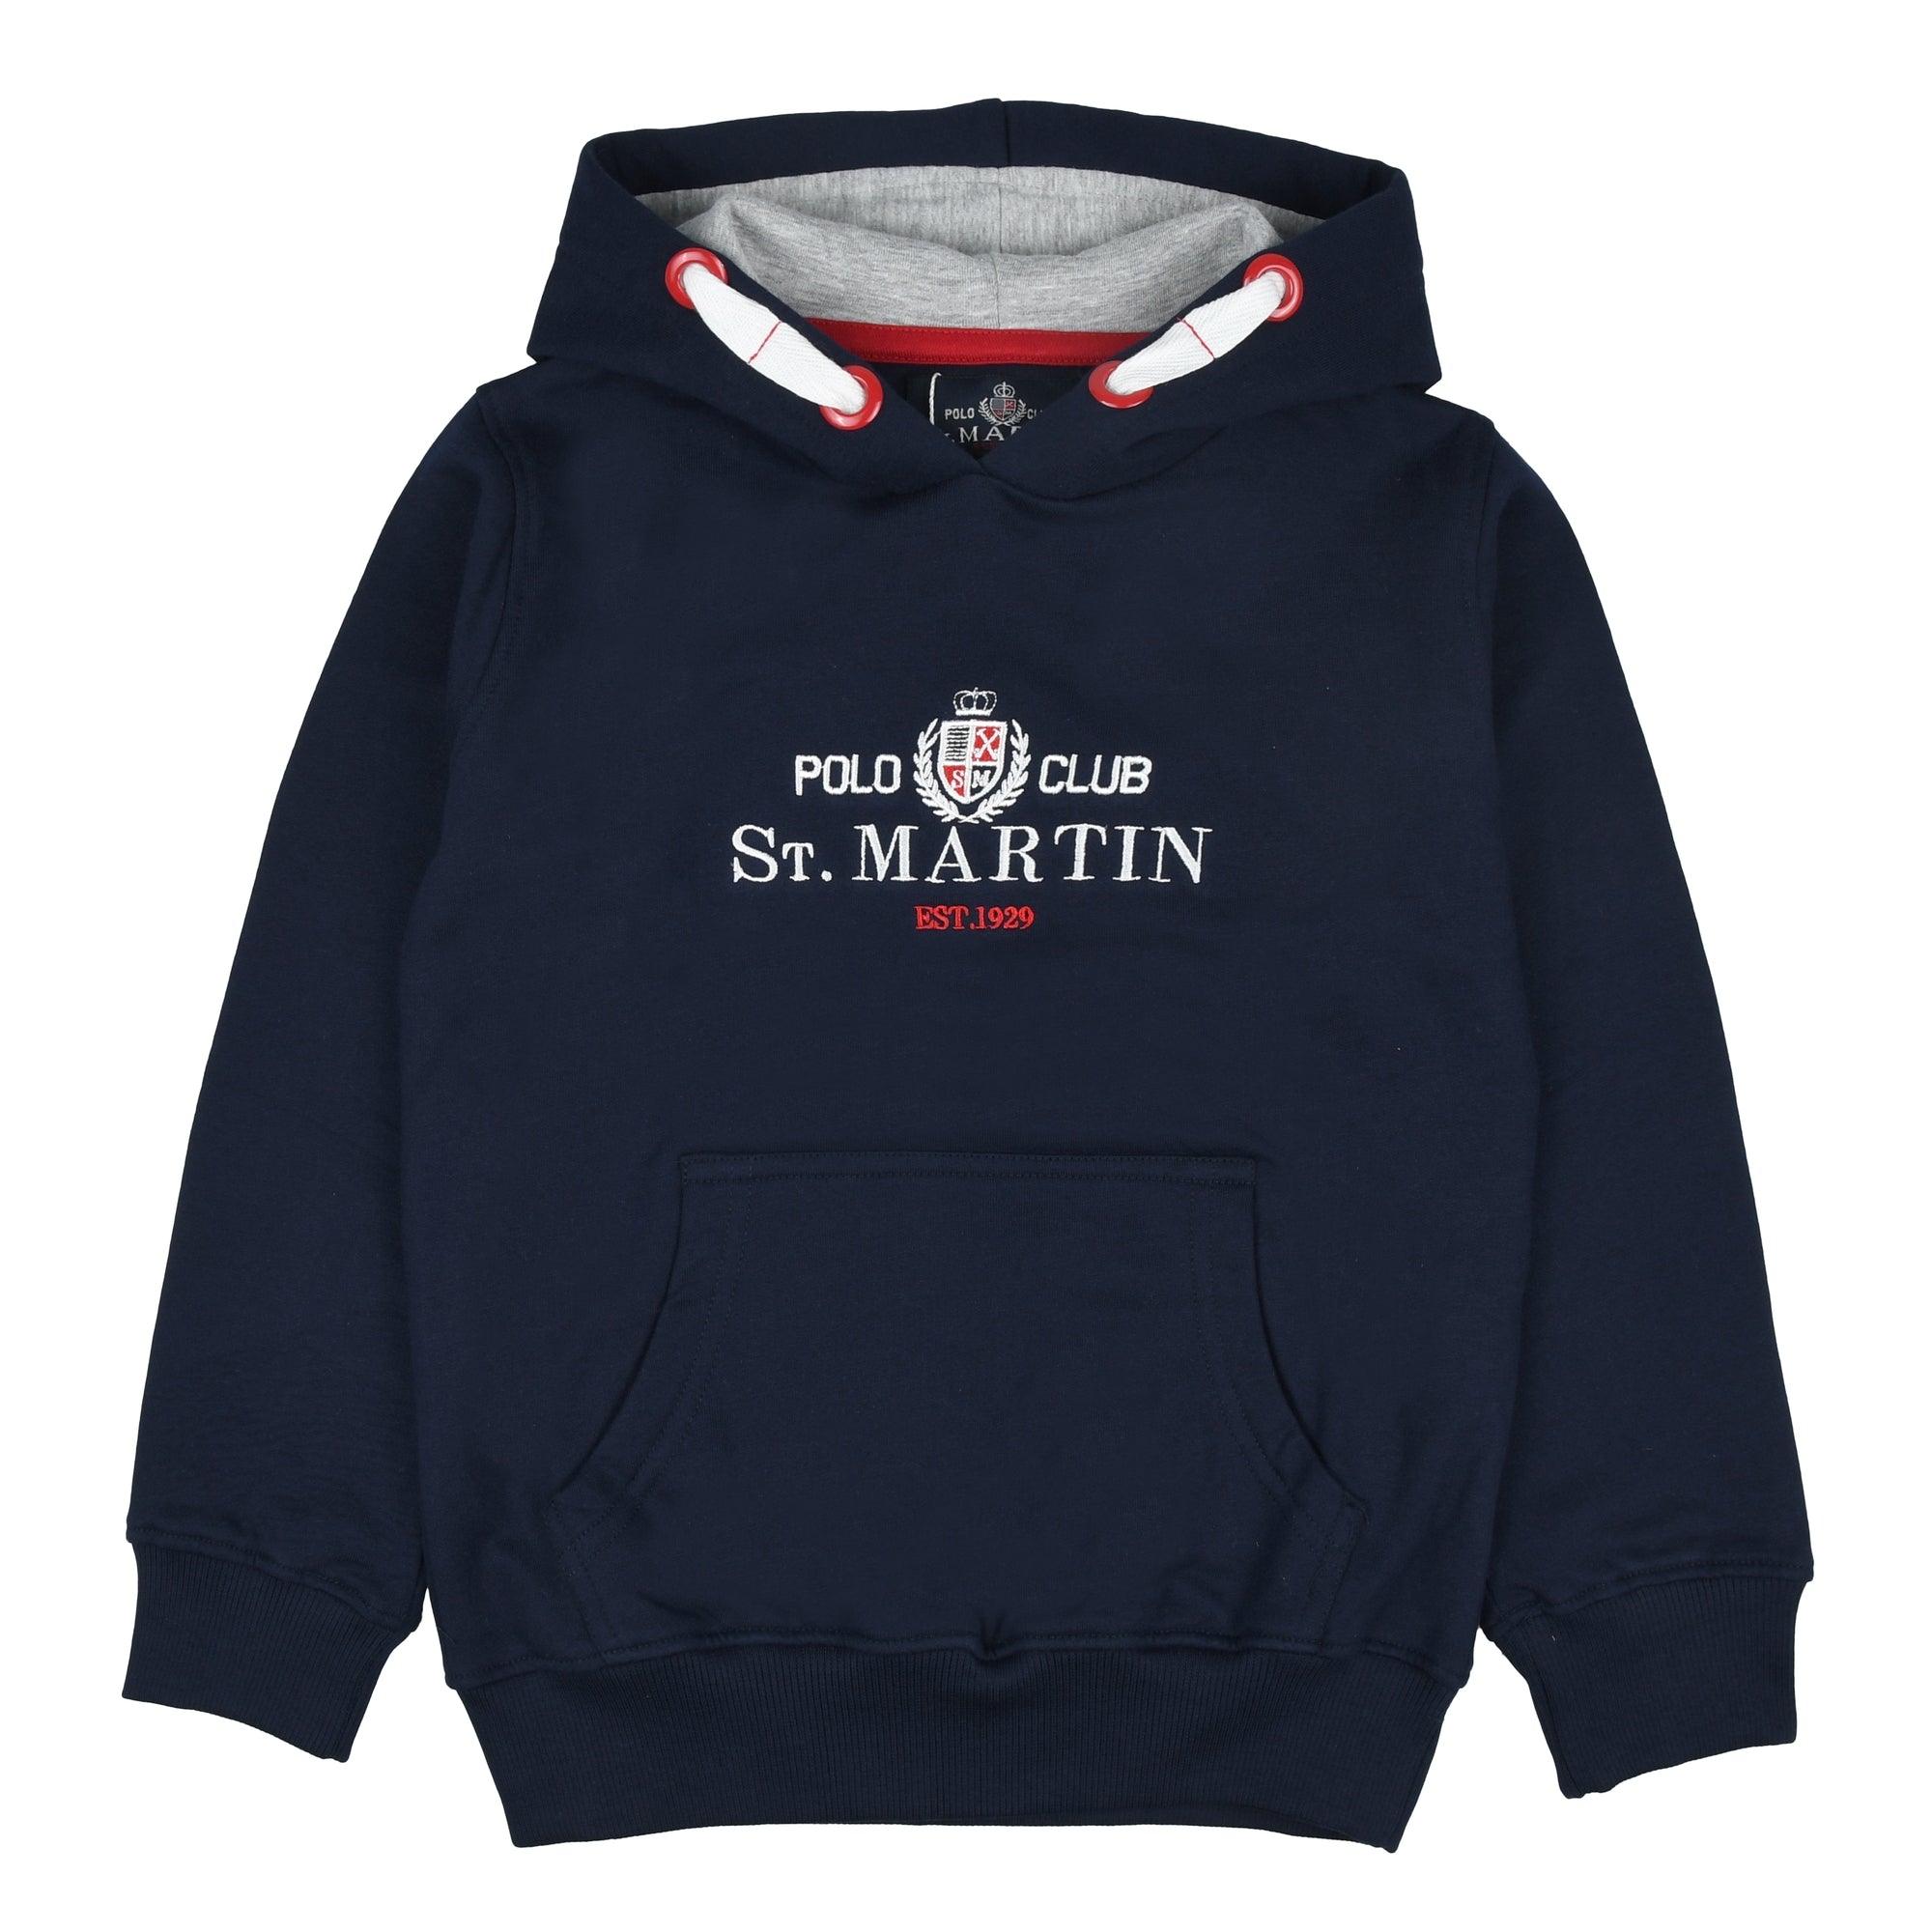 St. Martin sweatshirt with hood